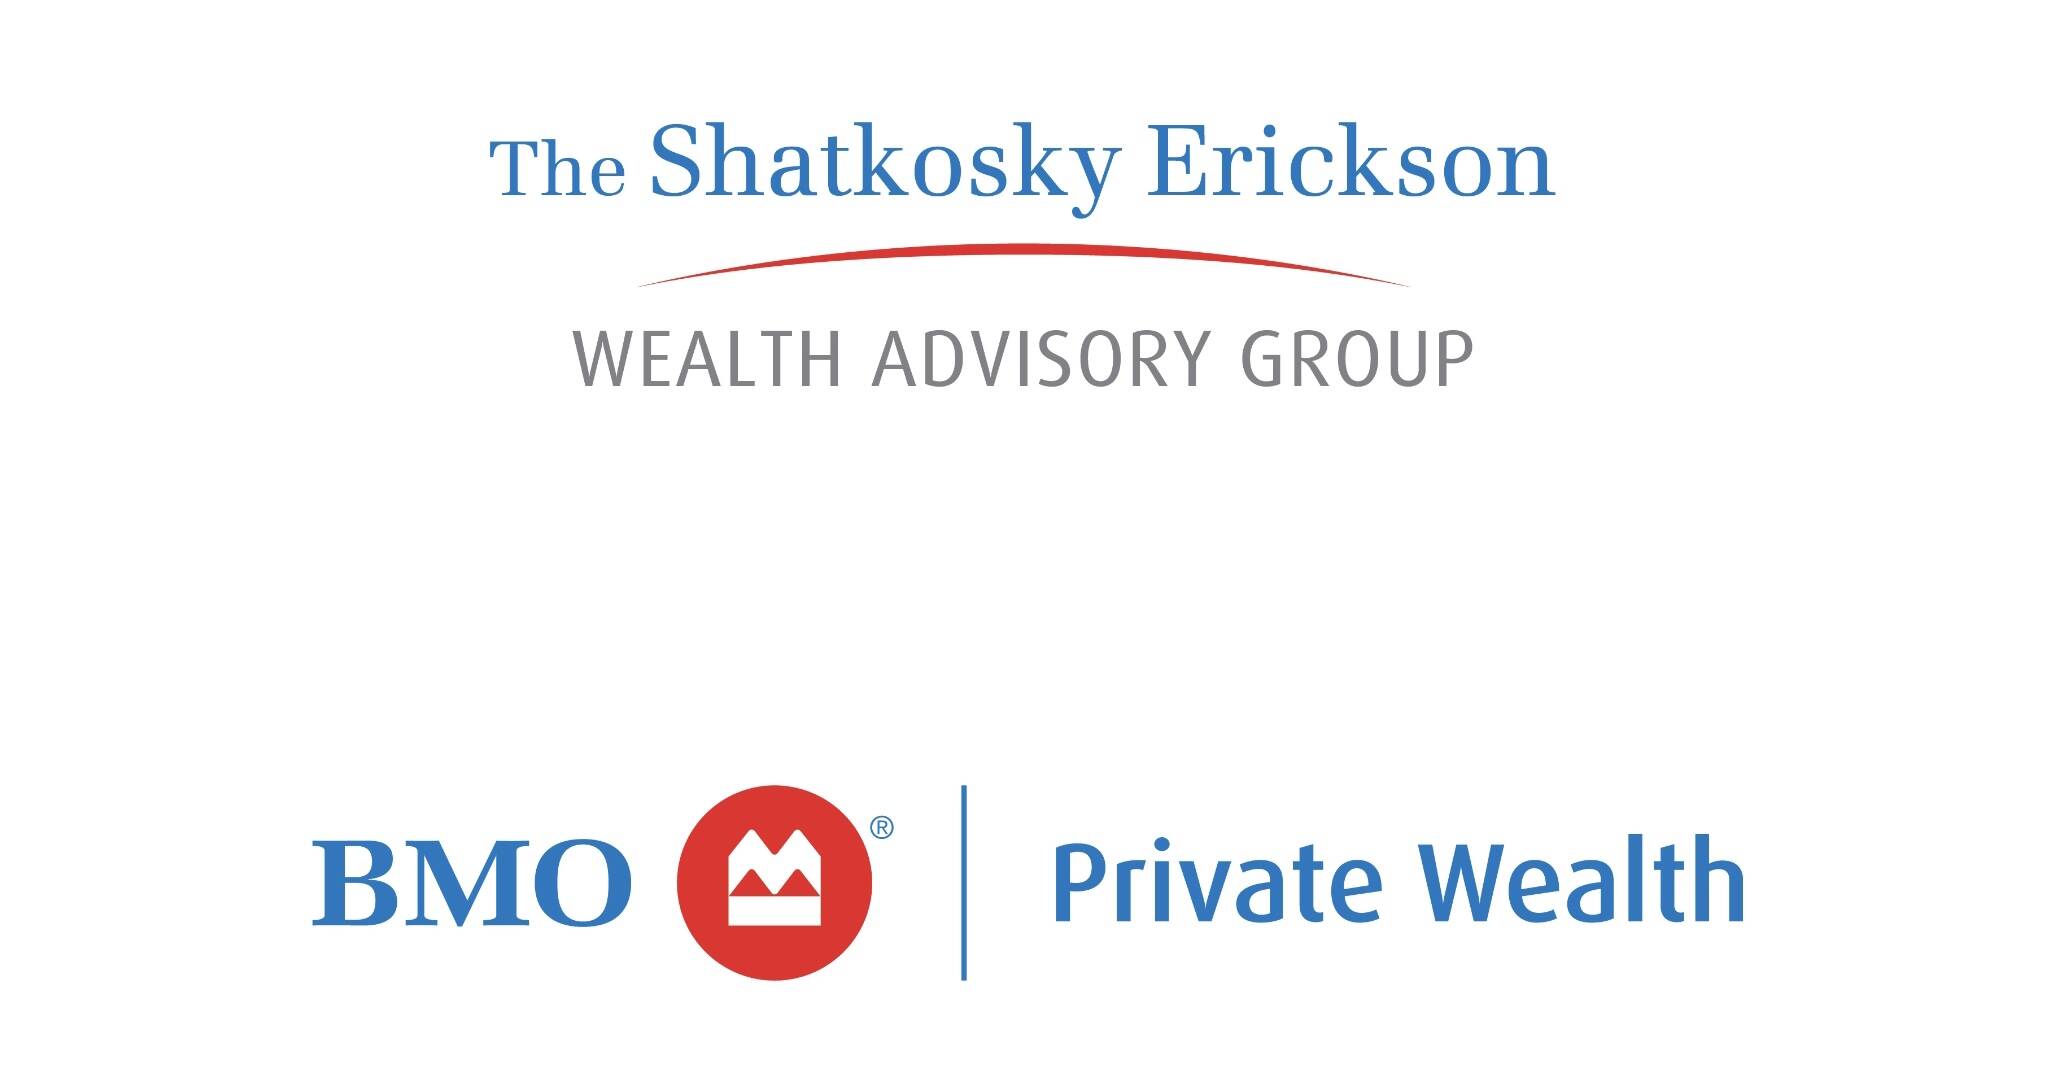 The Shatkosky Erickson Wealth Advisory Group